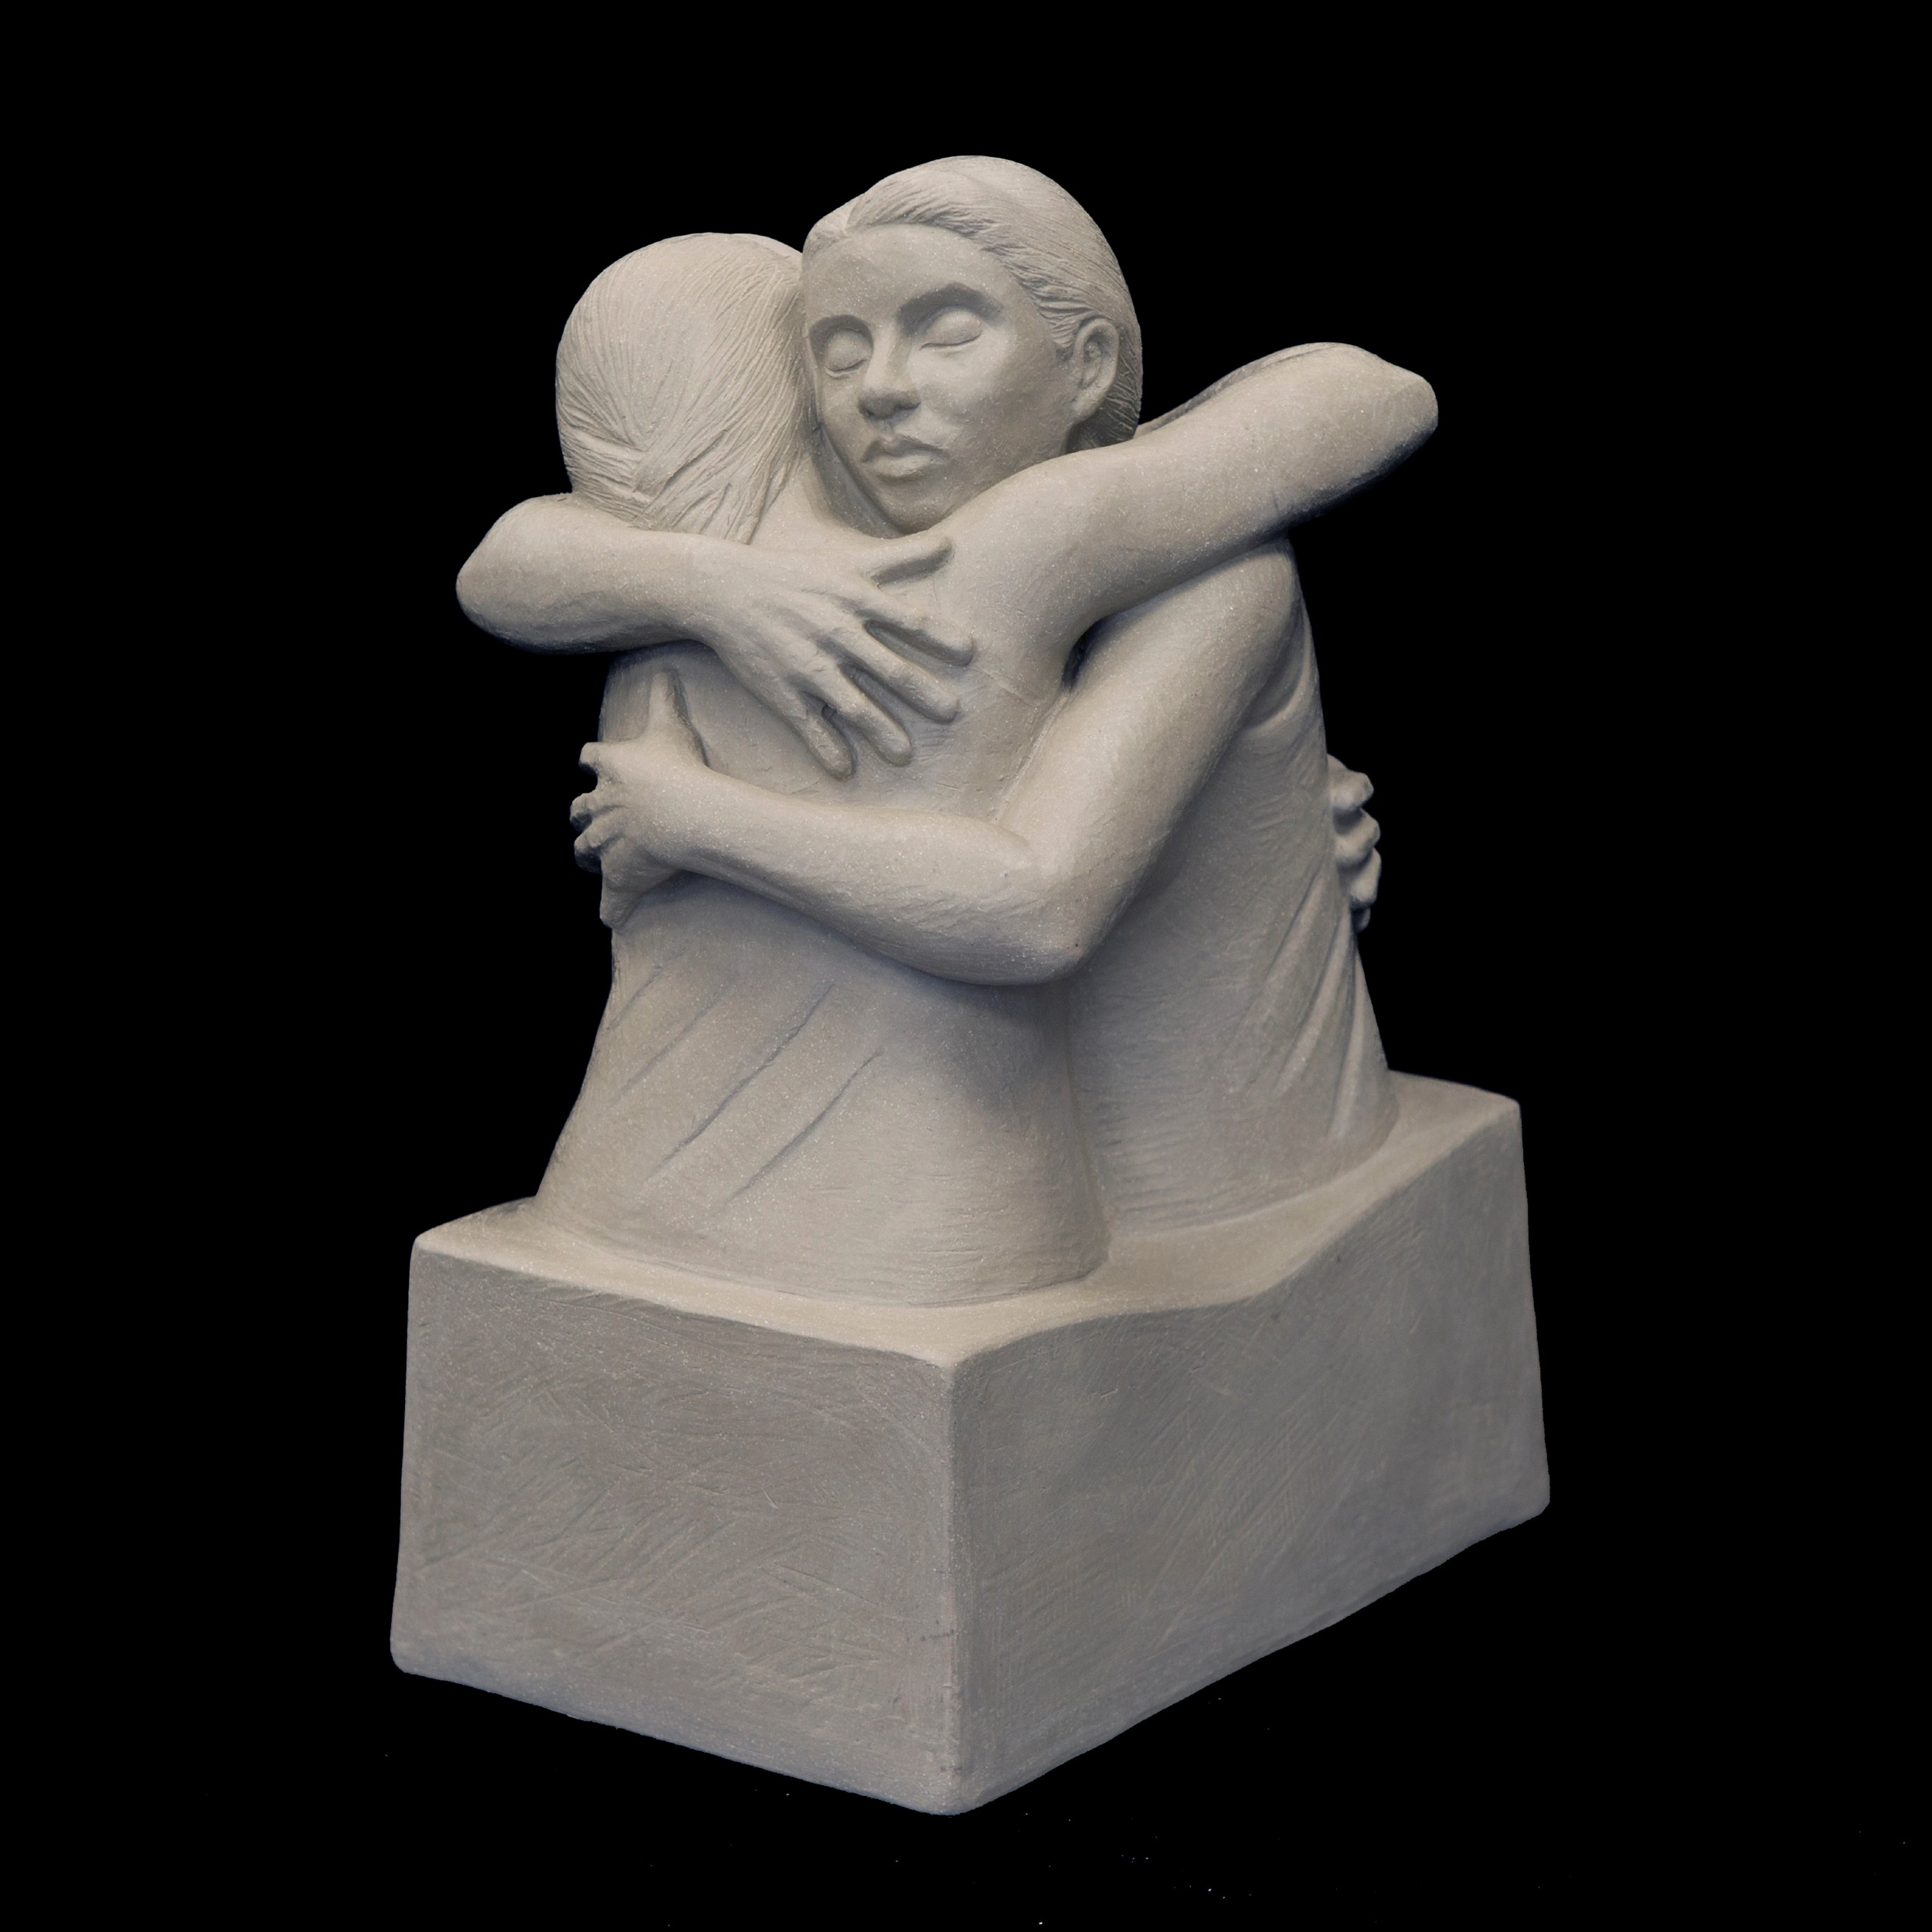 The Hug sculpture 2500px